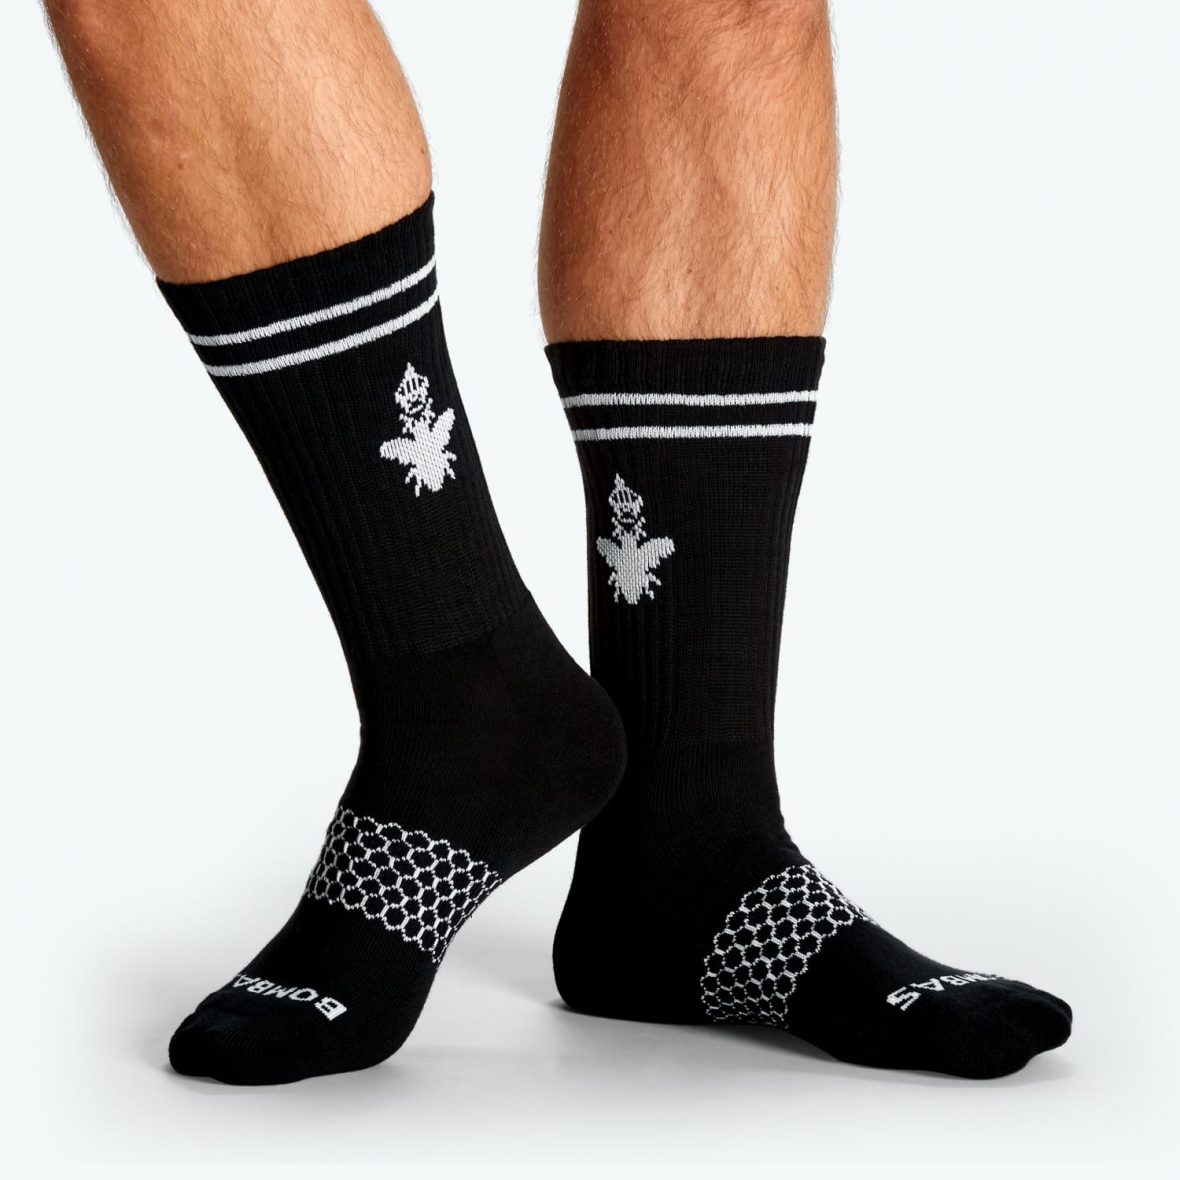 Tất Bombas Unisex Originals Calf Socks Size M